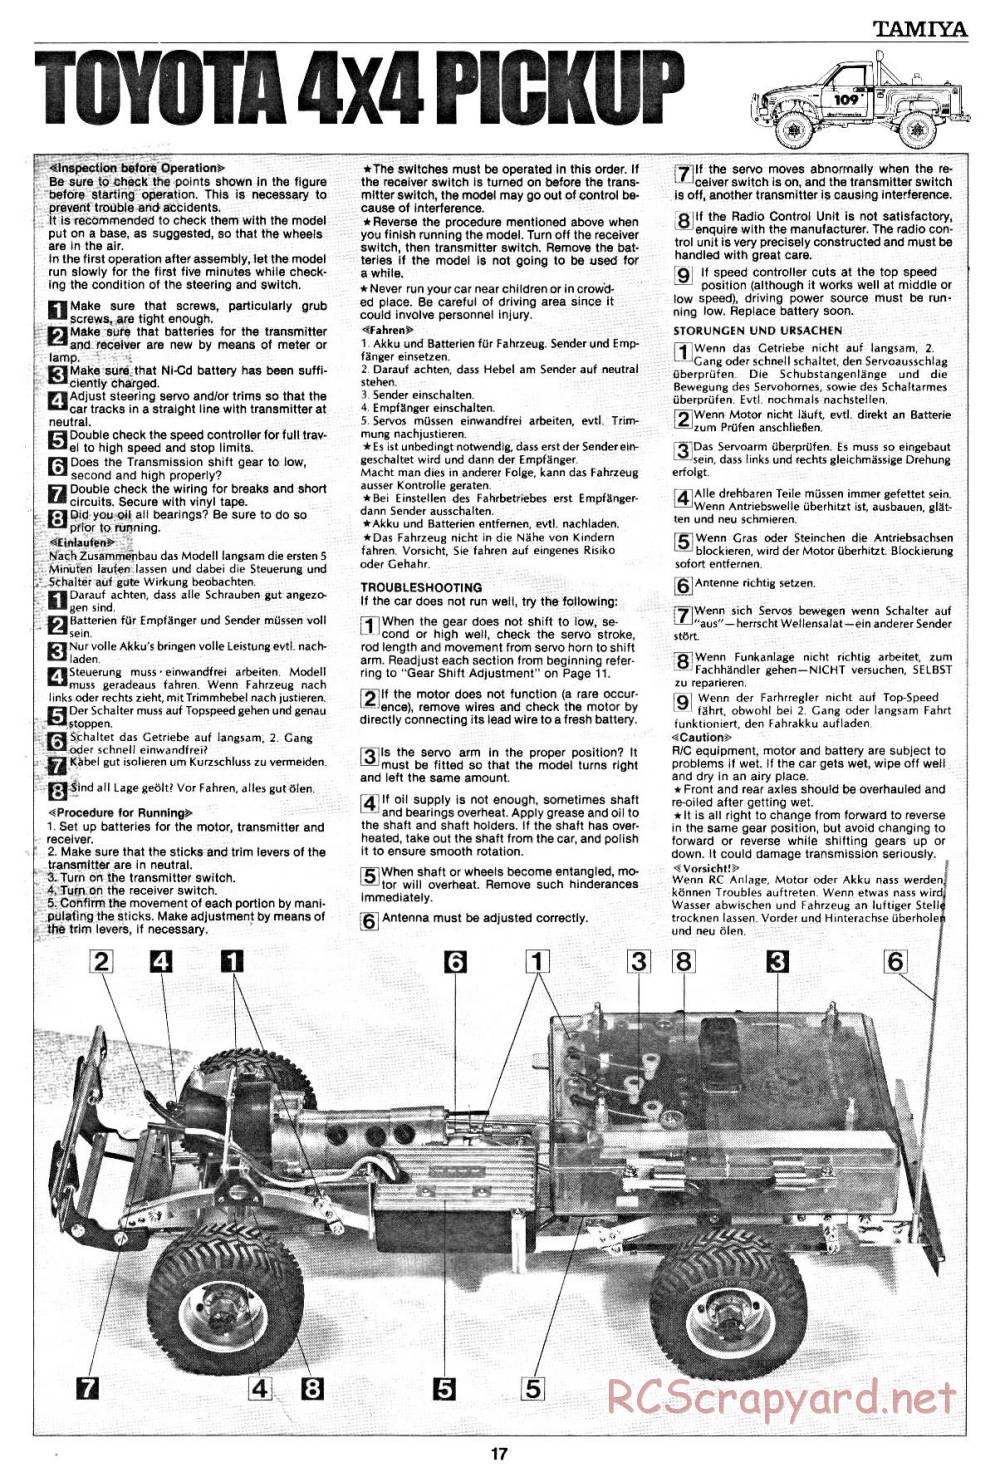 Tamiya - Toyota 4x4 Pick-Up - 58028 - Manual - Page 17